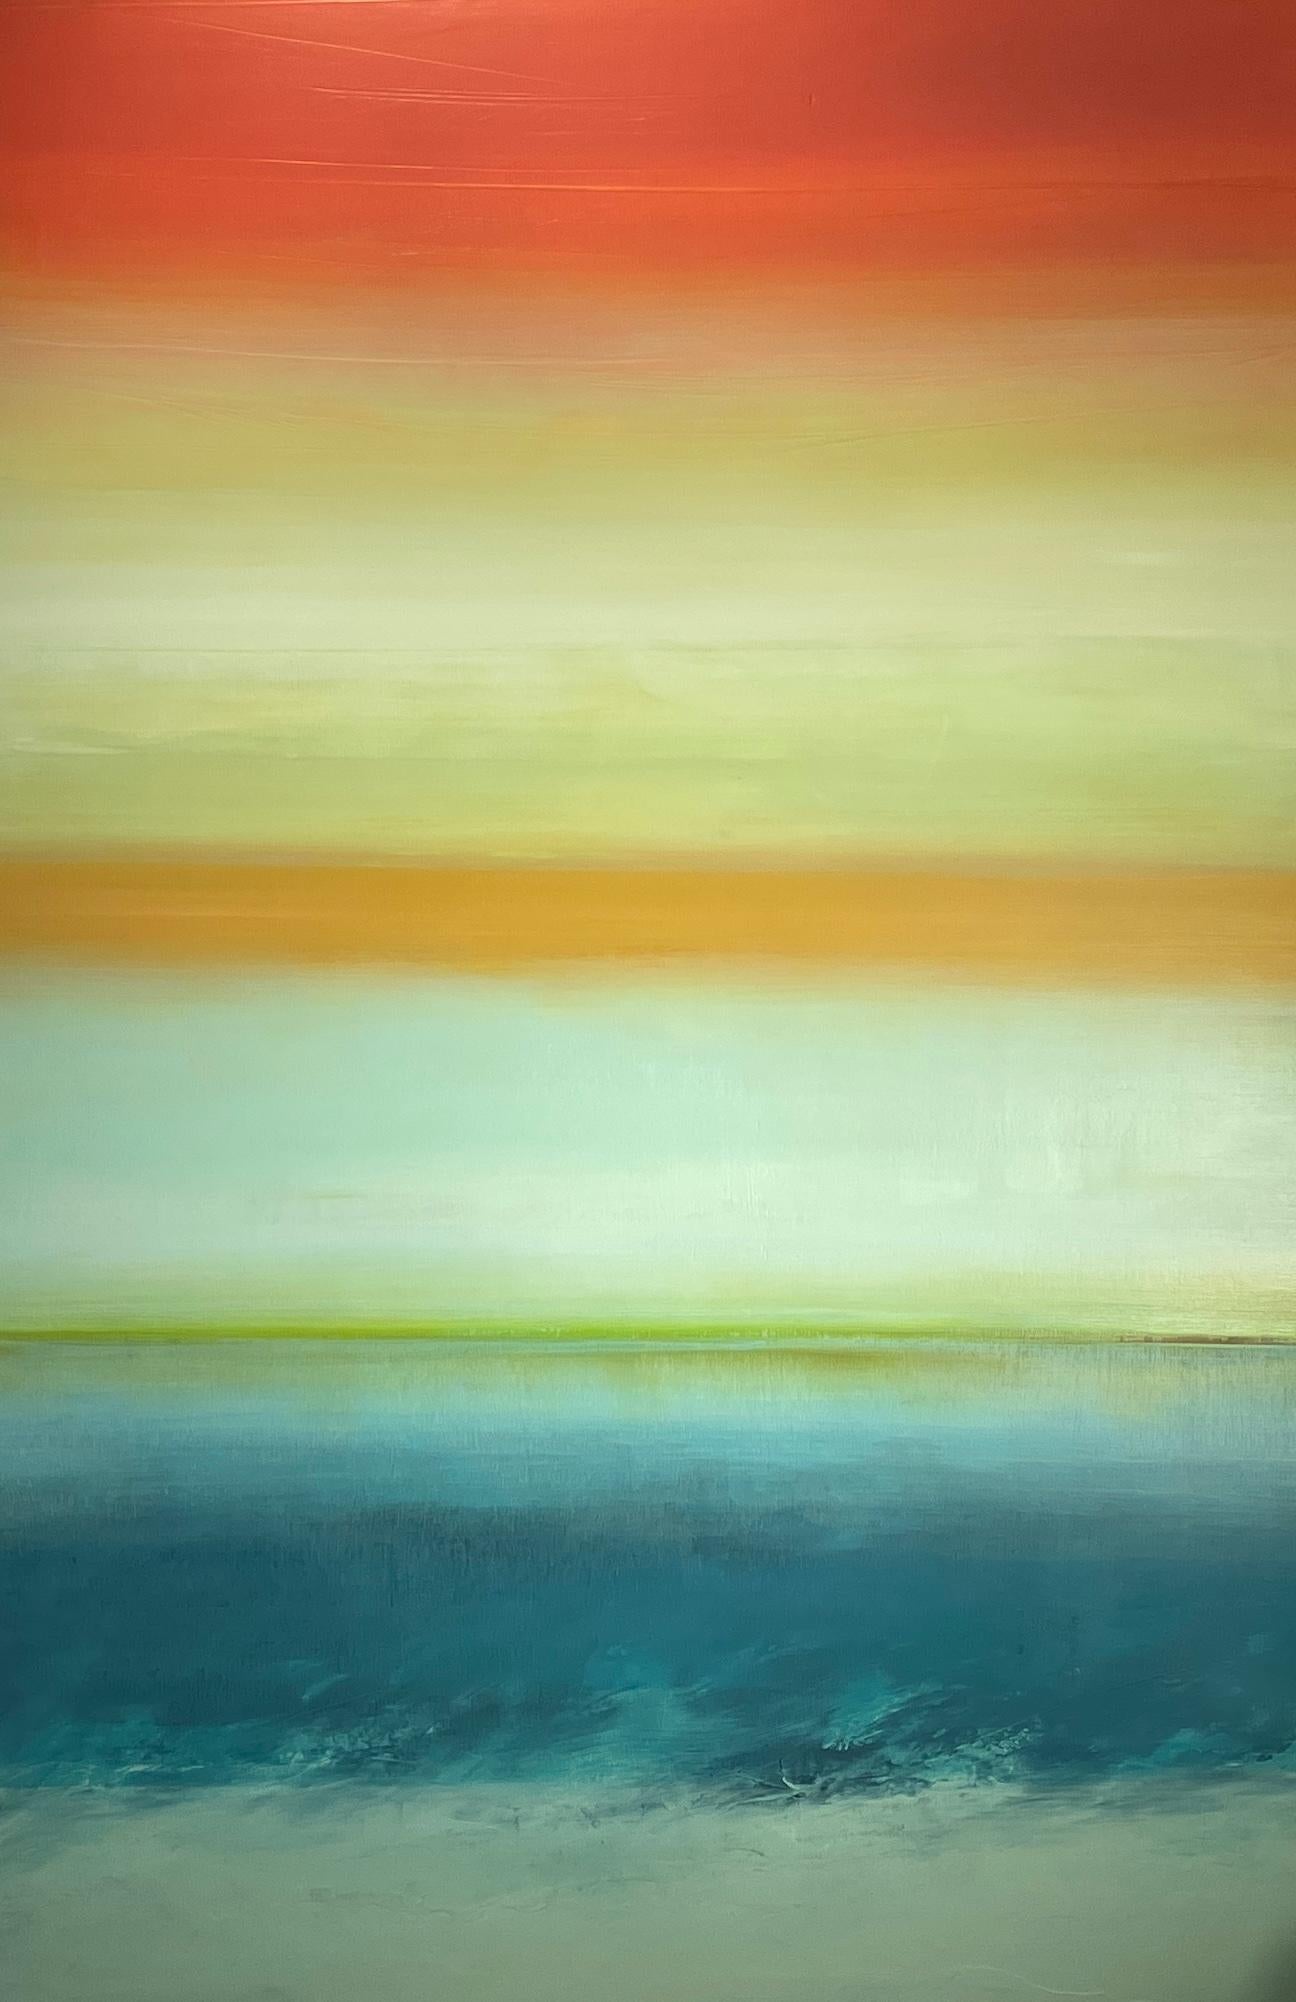 Landscape Painting Katheryn Holt - "Sea Sprite" Grande peinture contemporaine abstraite expressionniste en Mixed Media paysage marin